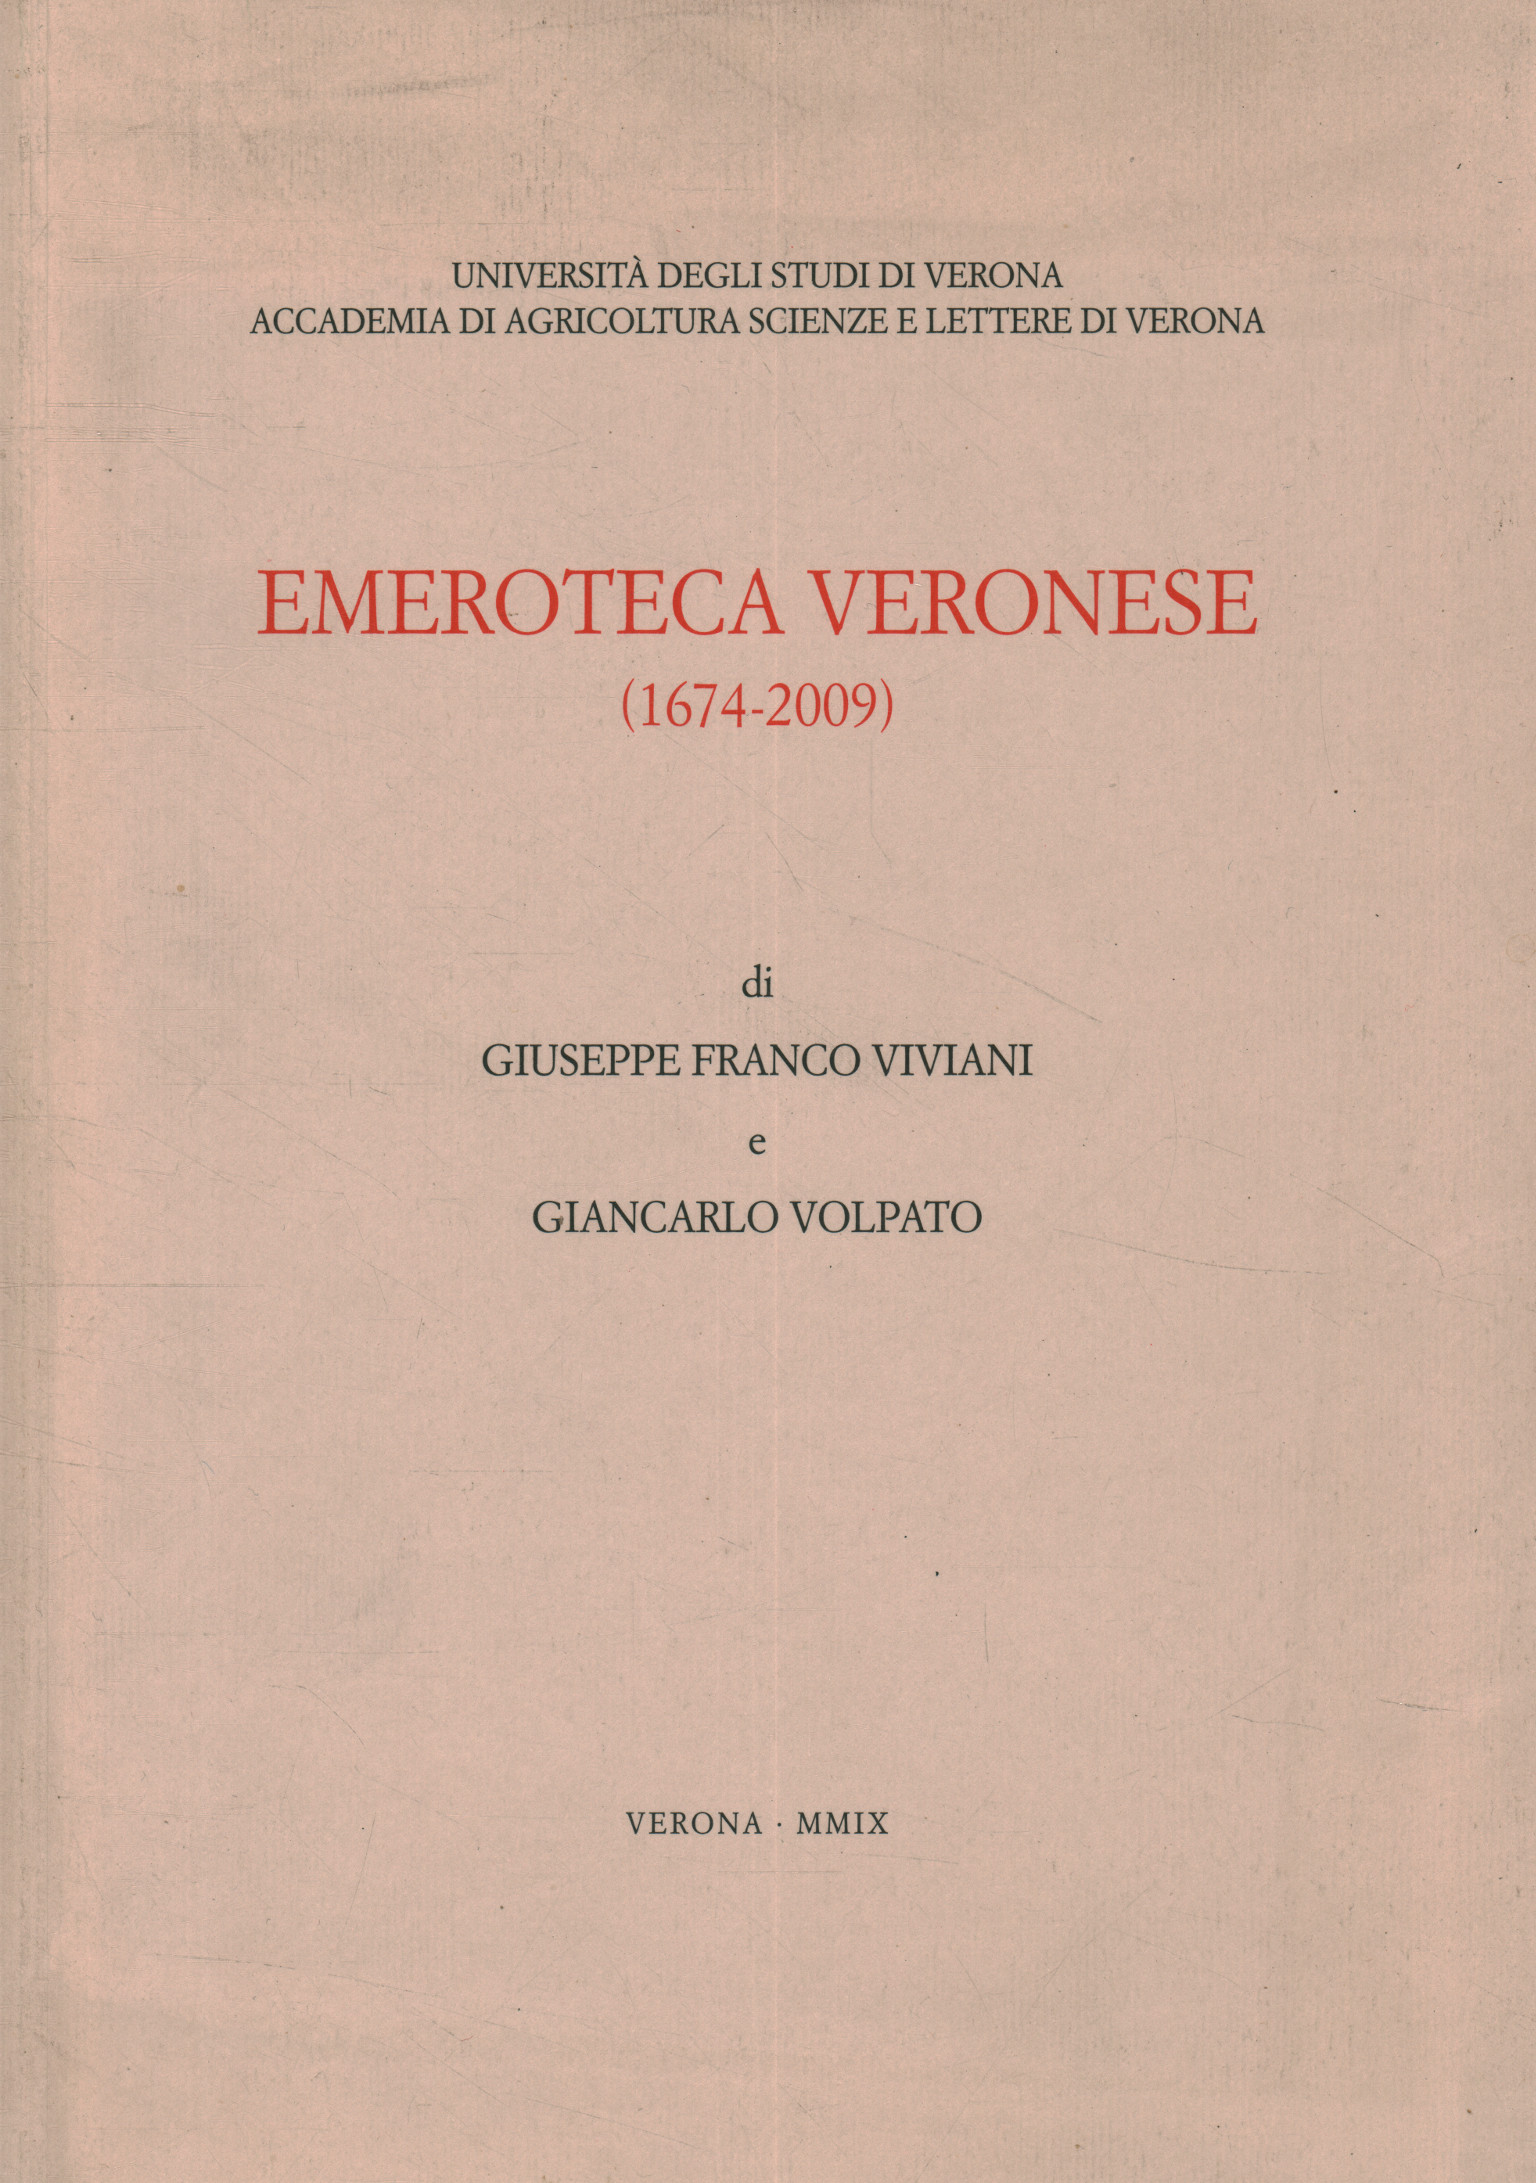 Emeroteca veronese (1674-2009)